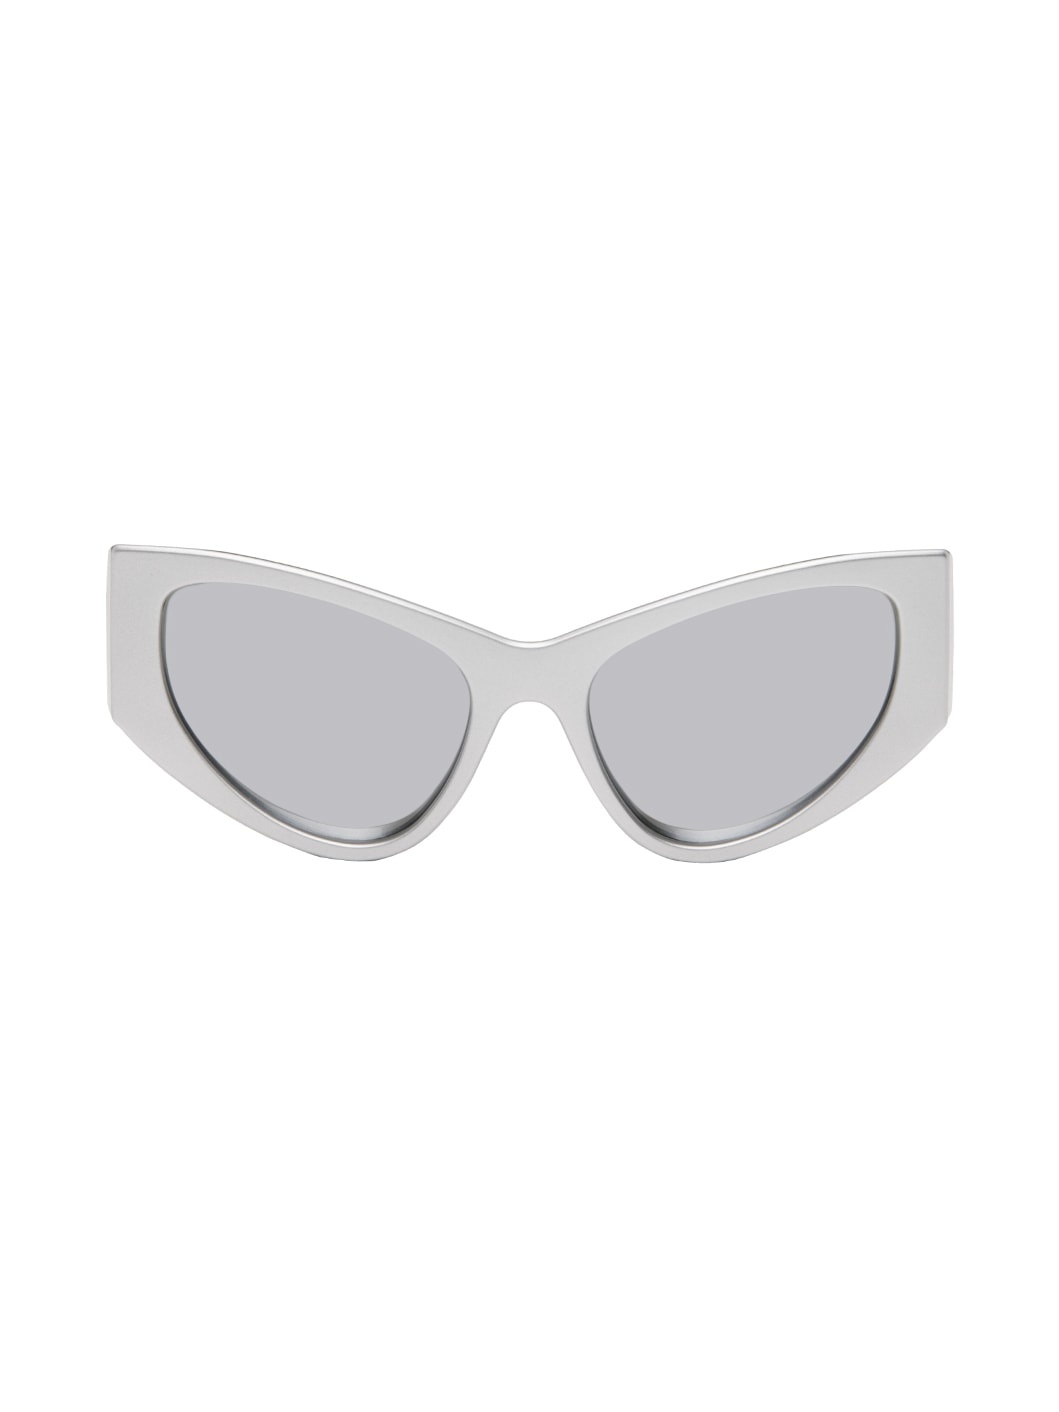 Silver LED Frame Sunglasses - 1